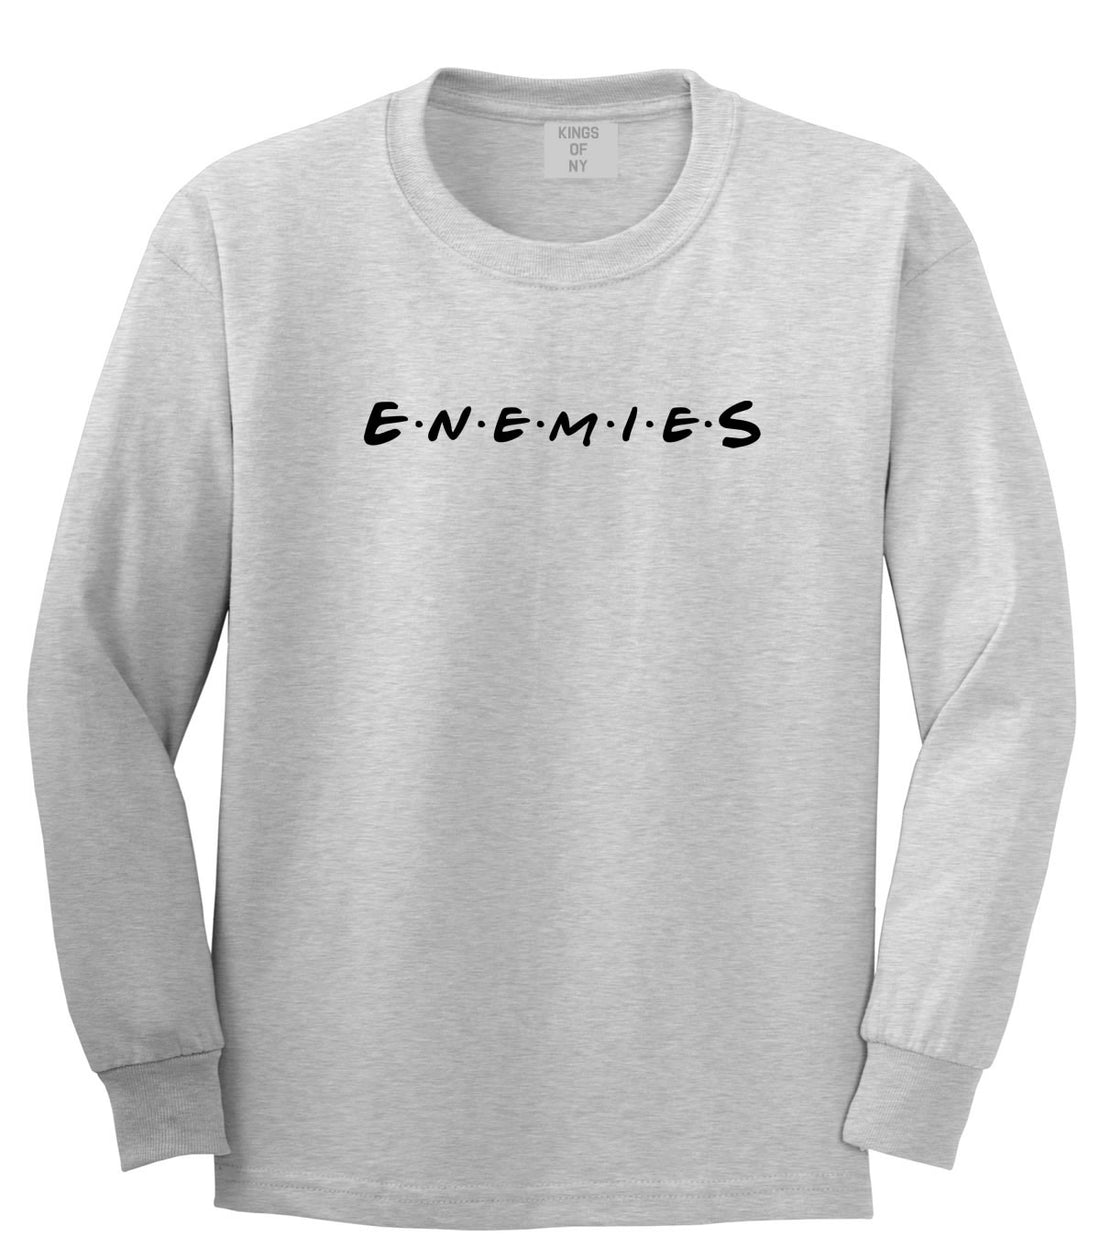 Enemies Friends Parody Long Sleeve T-Shirt in Grey By Kings Of NY